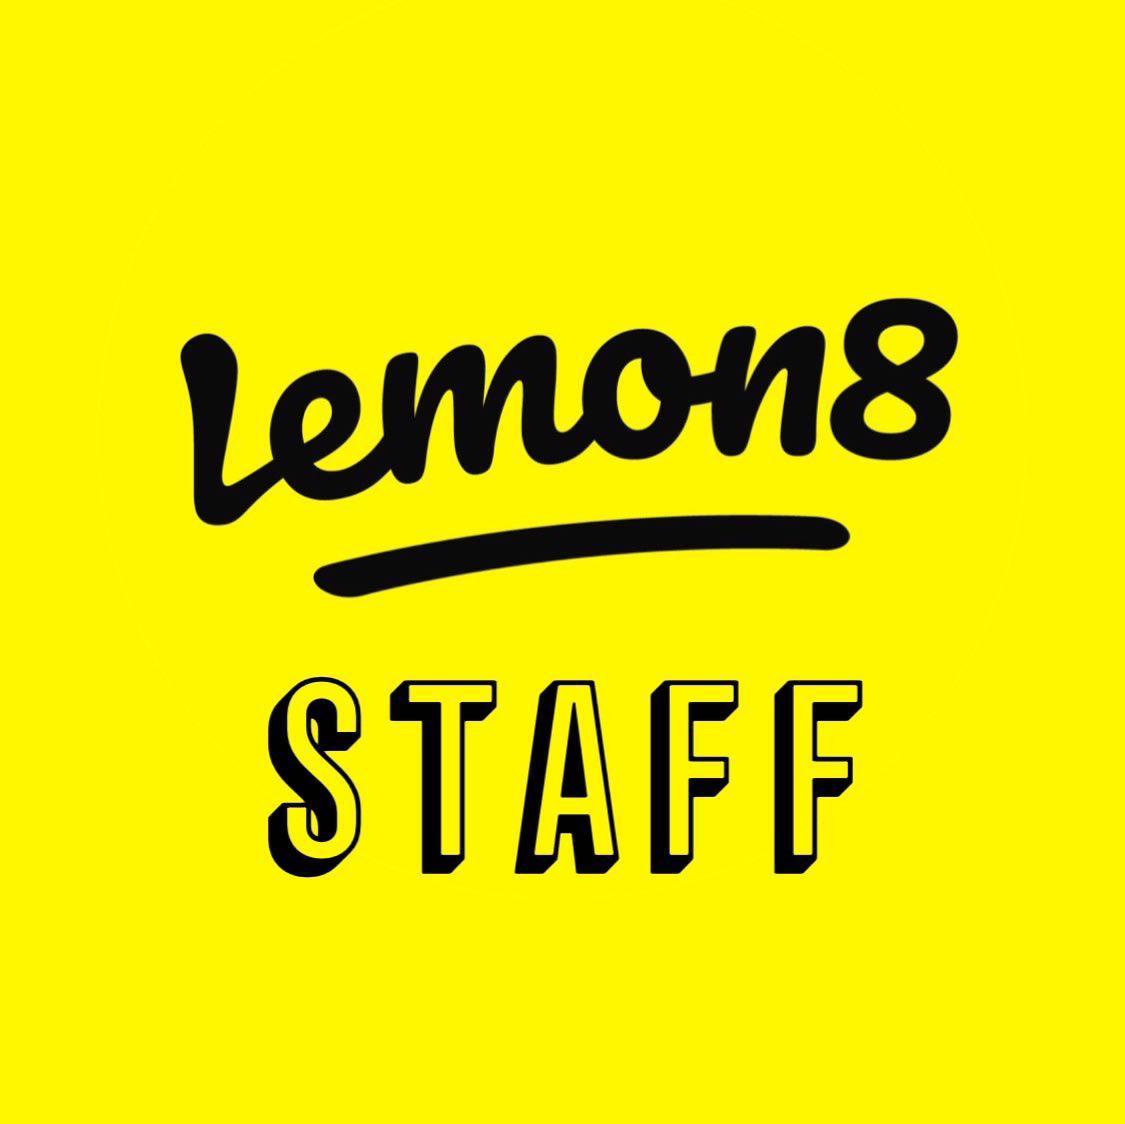 Lemon8 Staff_入澤の画像